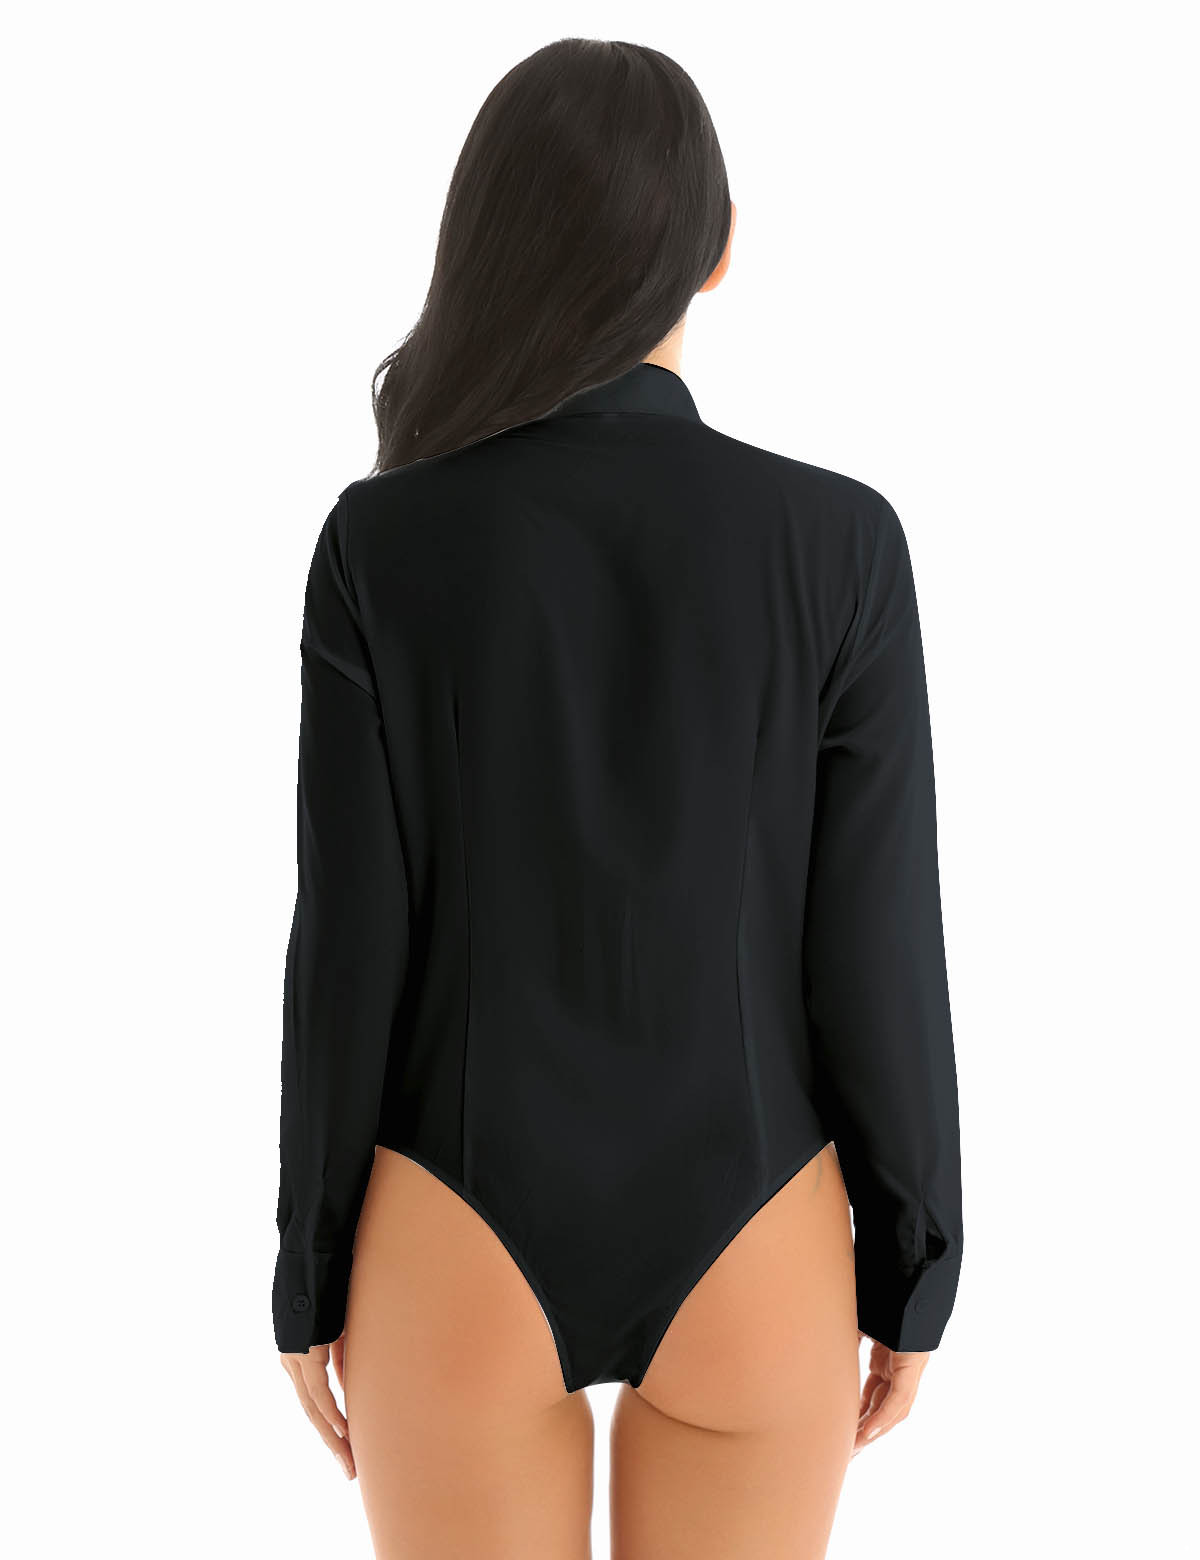 DPOIS Women's Long Sleeve Button Down Shirts Work Office Bodysuit Shirt  Blouse Black S 